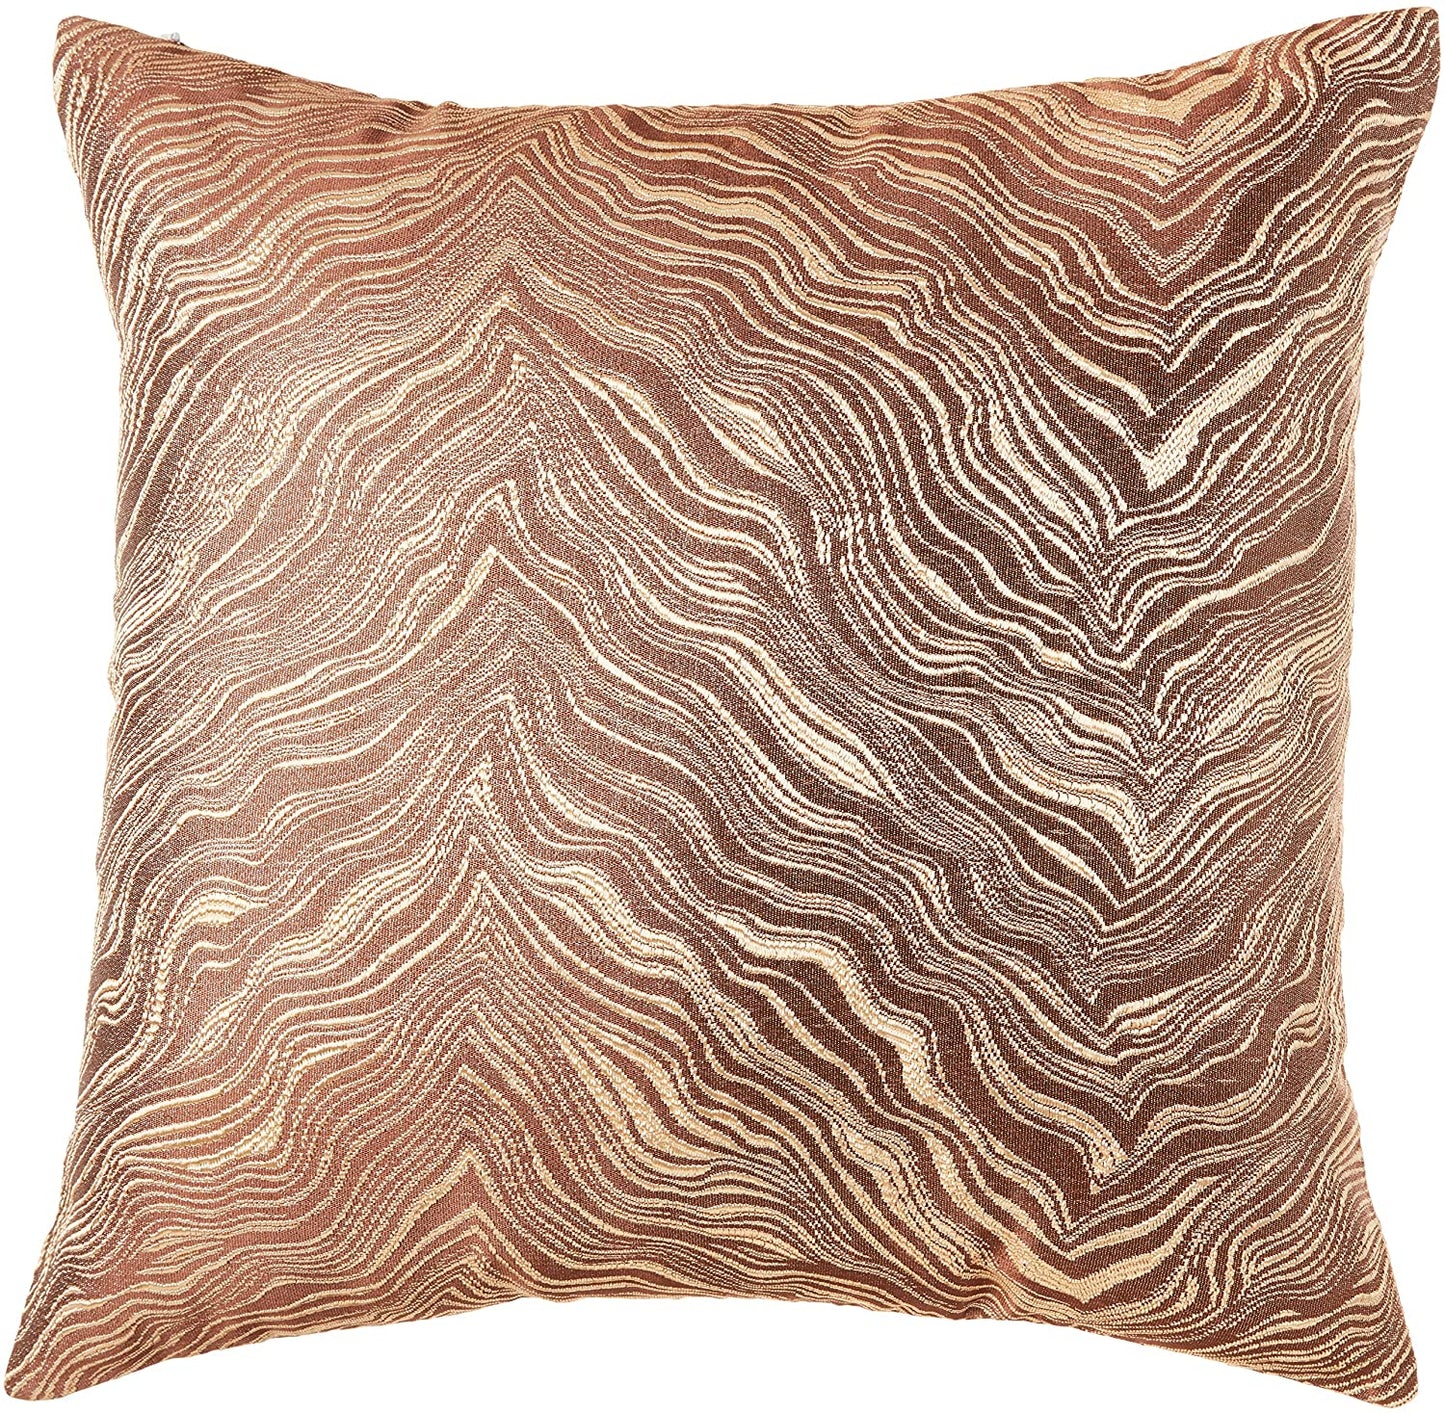 Boutique Zebra Patern Decorative Accent Throw Pillow